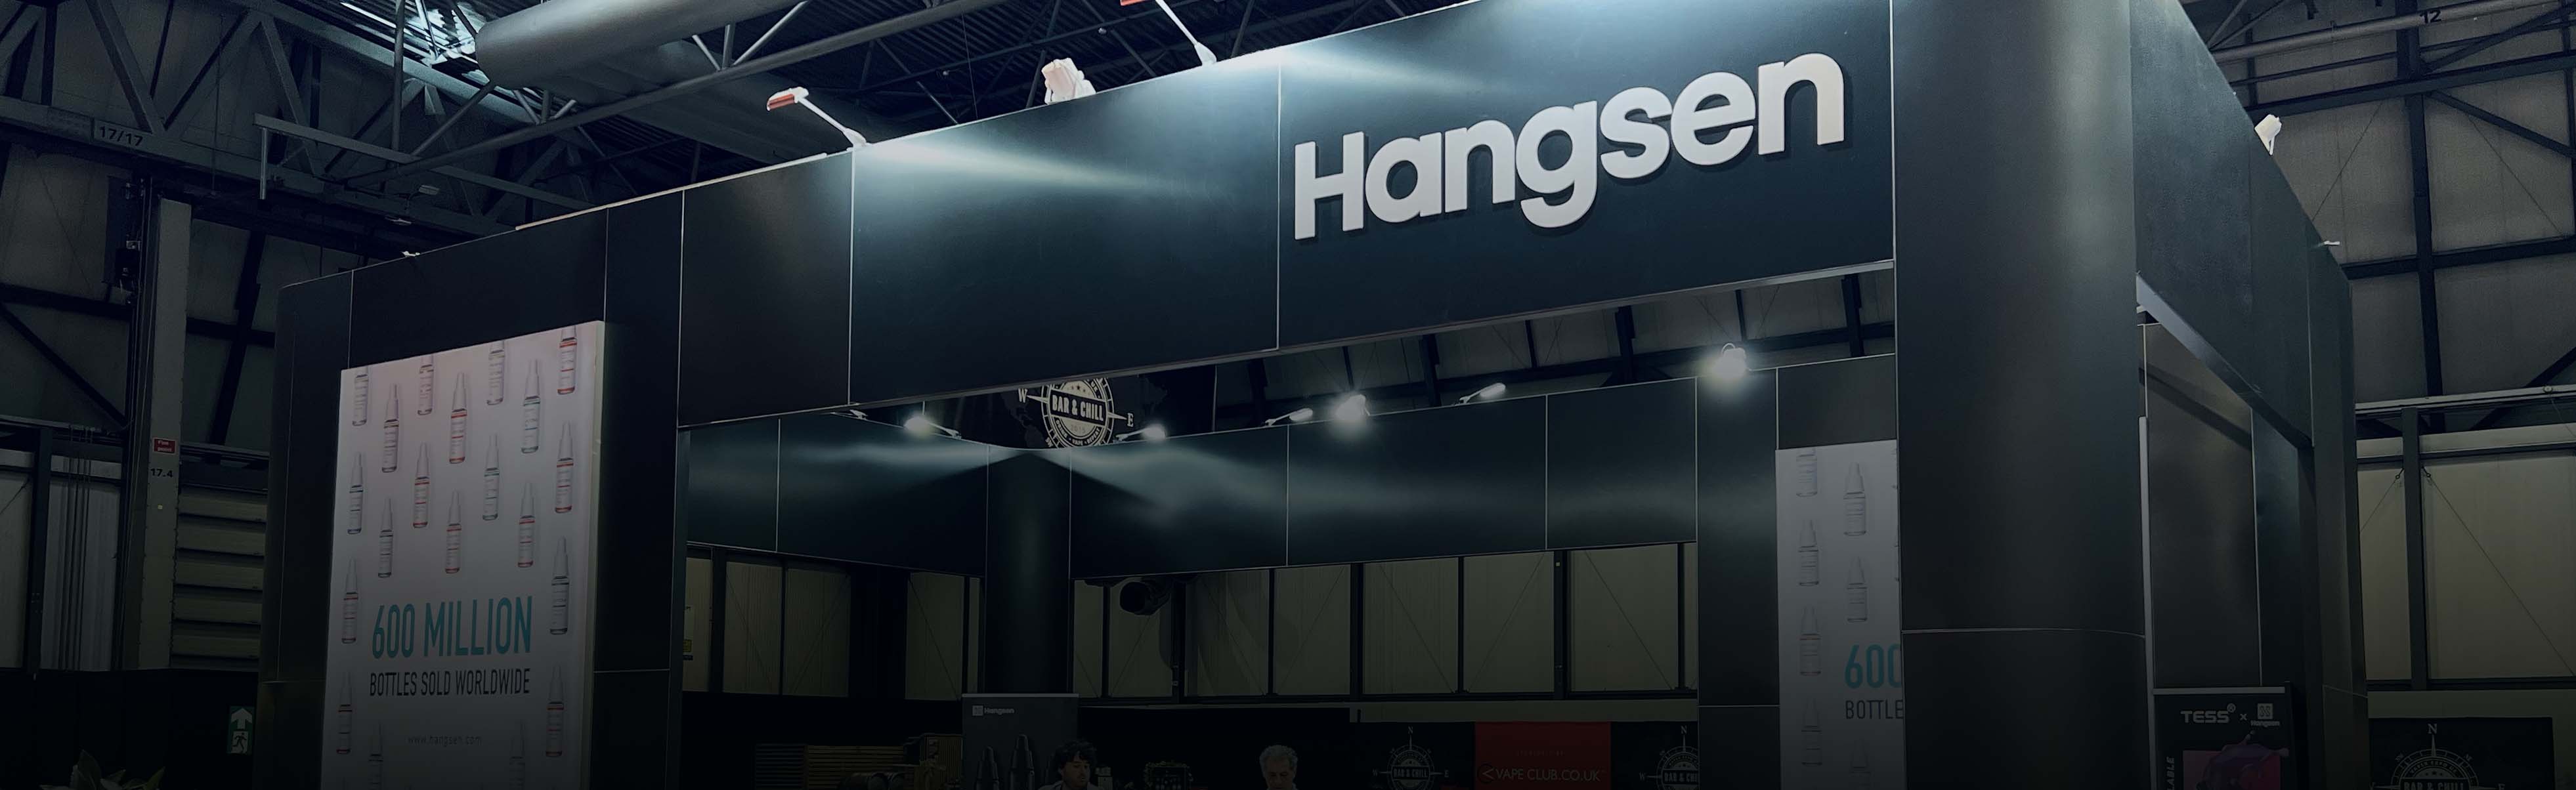 Hangsen debuted at the Vaper Expo 2022 in Birmingham